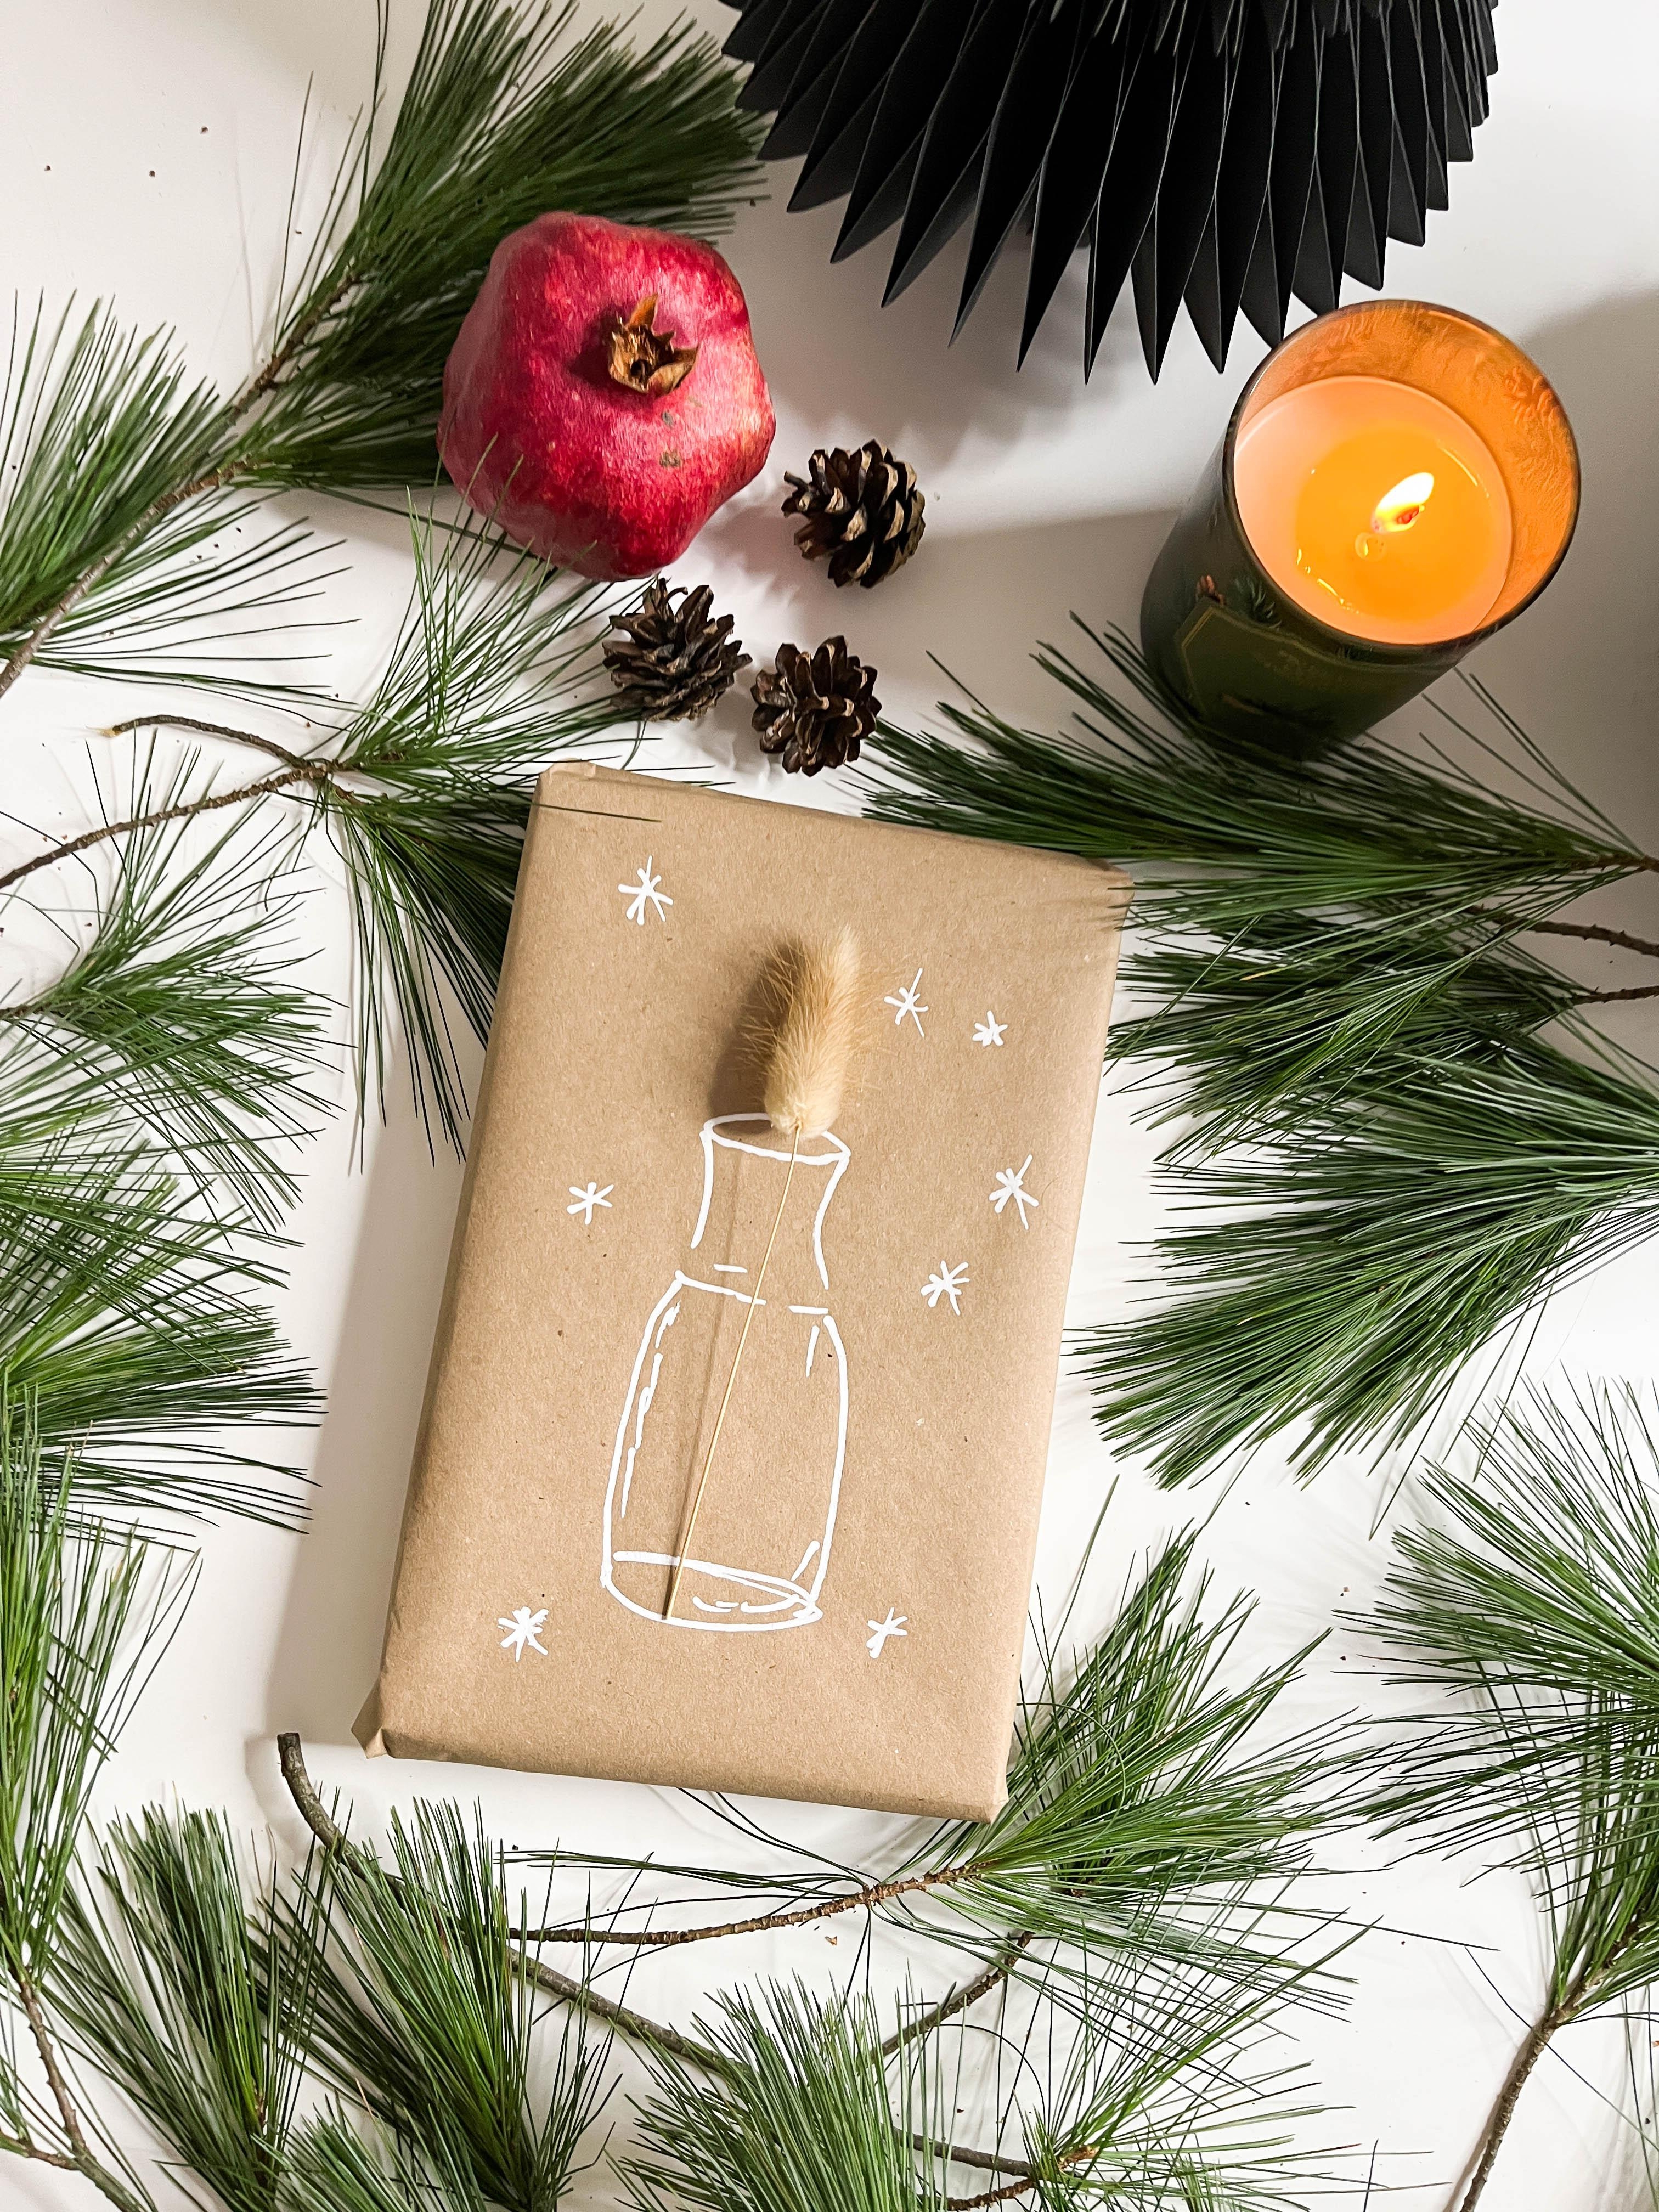 Langsam werden die ersten Geschenke verpackt 💫
#geschenkverpackung #verpackungsidee #weihnachtsgeschenke